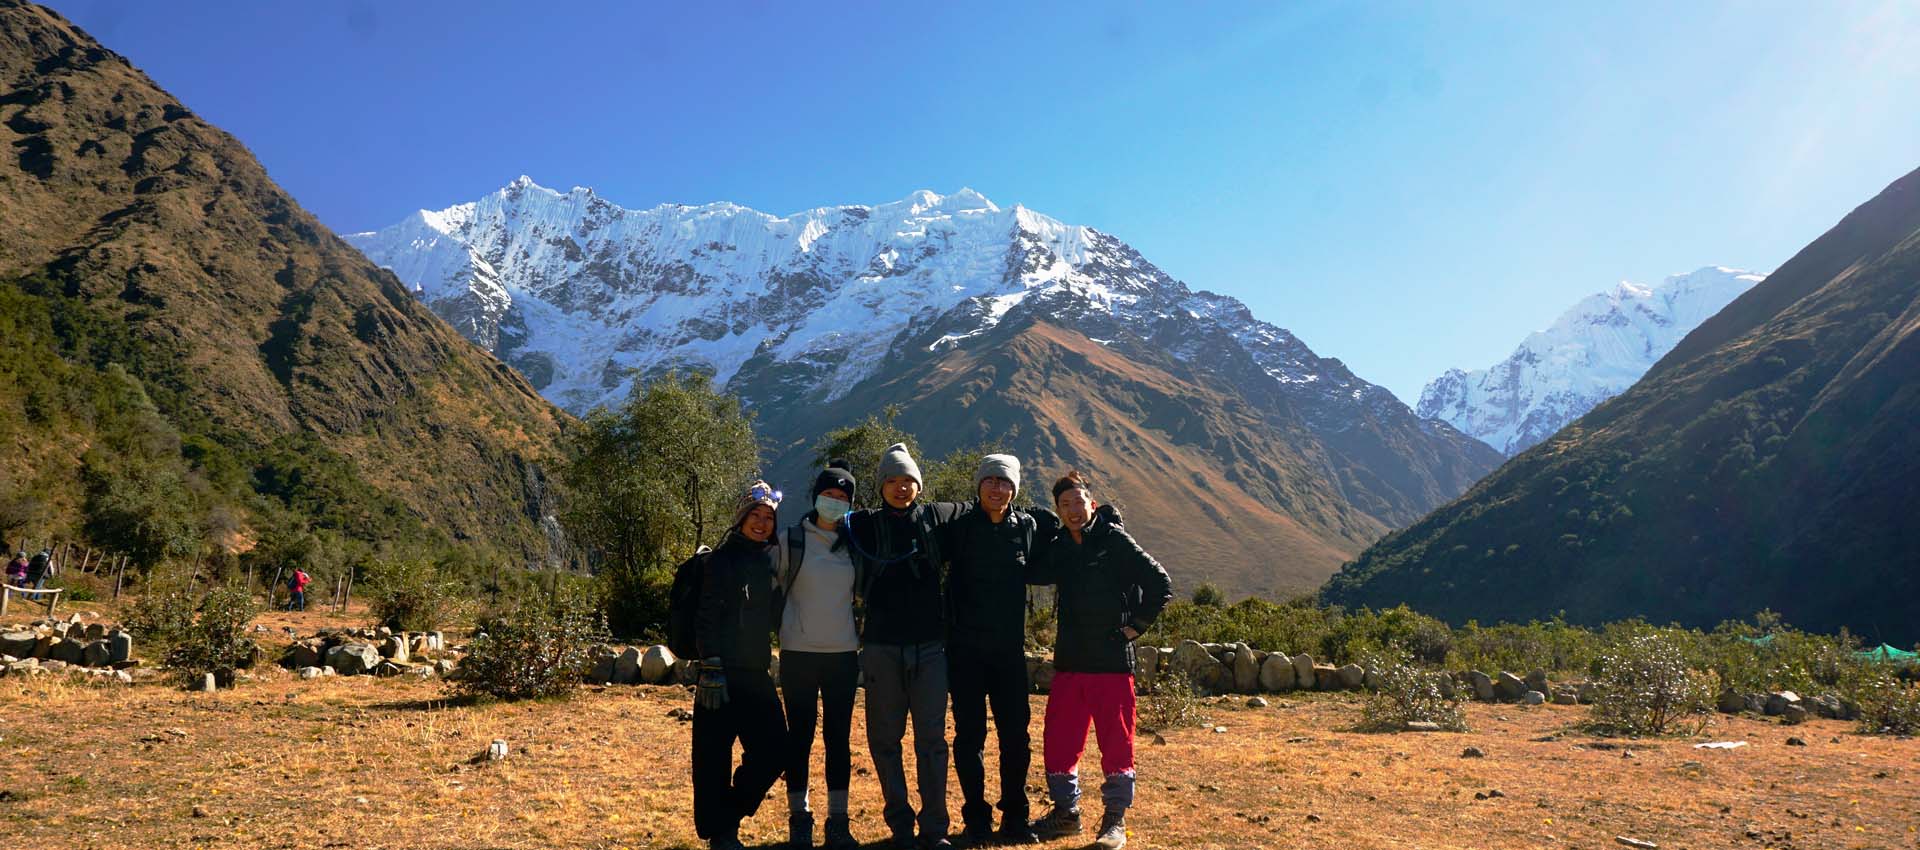 The Classic Salkantay Trek to Machu Picchu 5 days